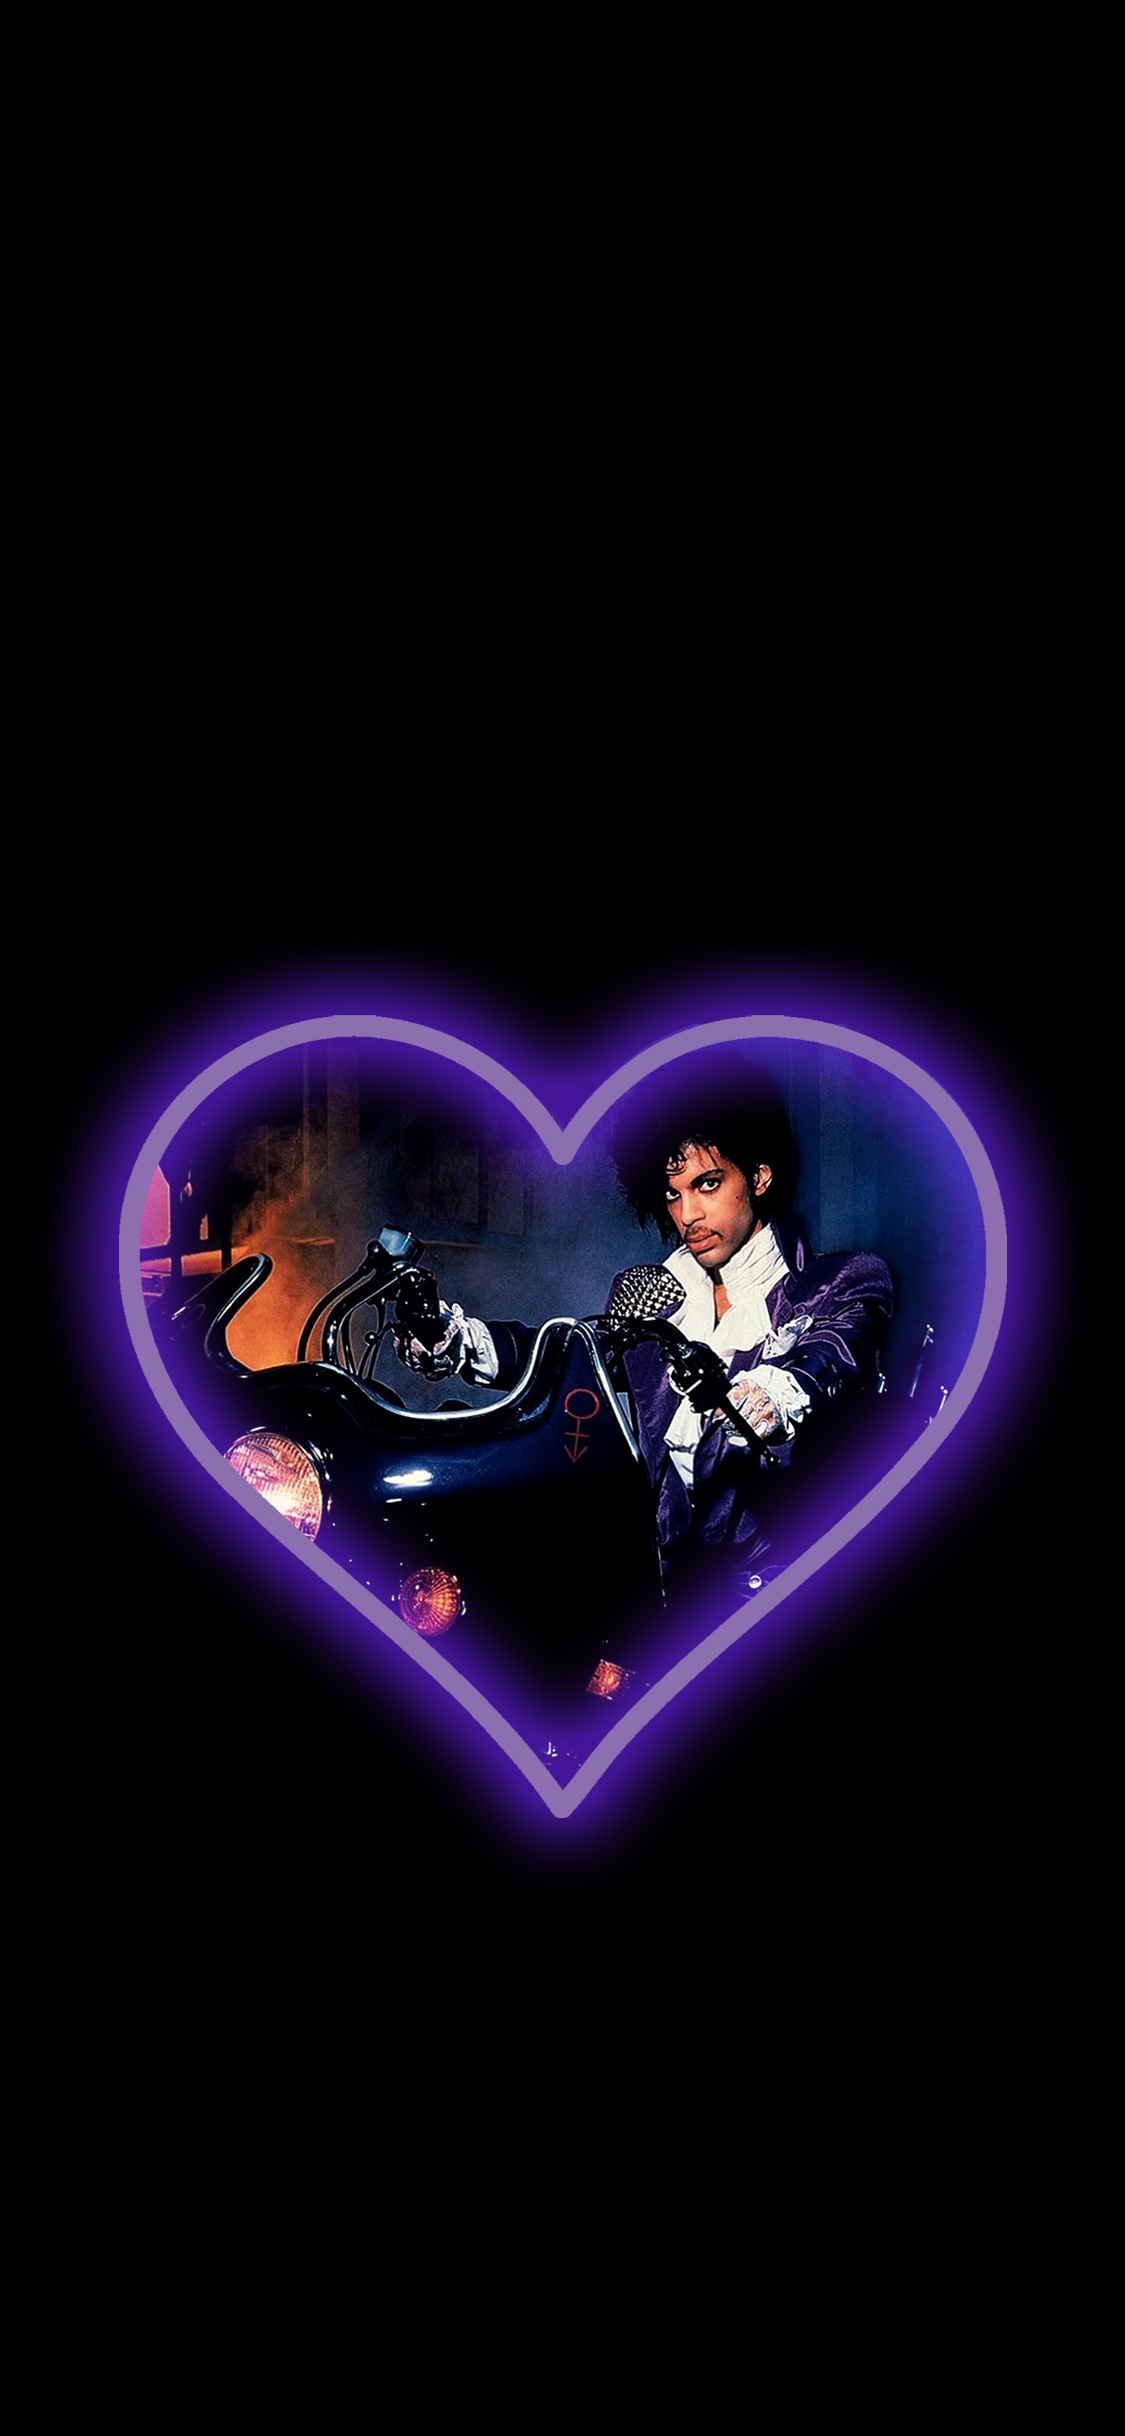 phone wallpaper displaying prince // purple rain (neon glow)